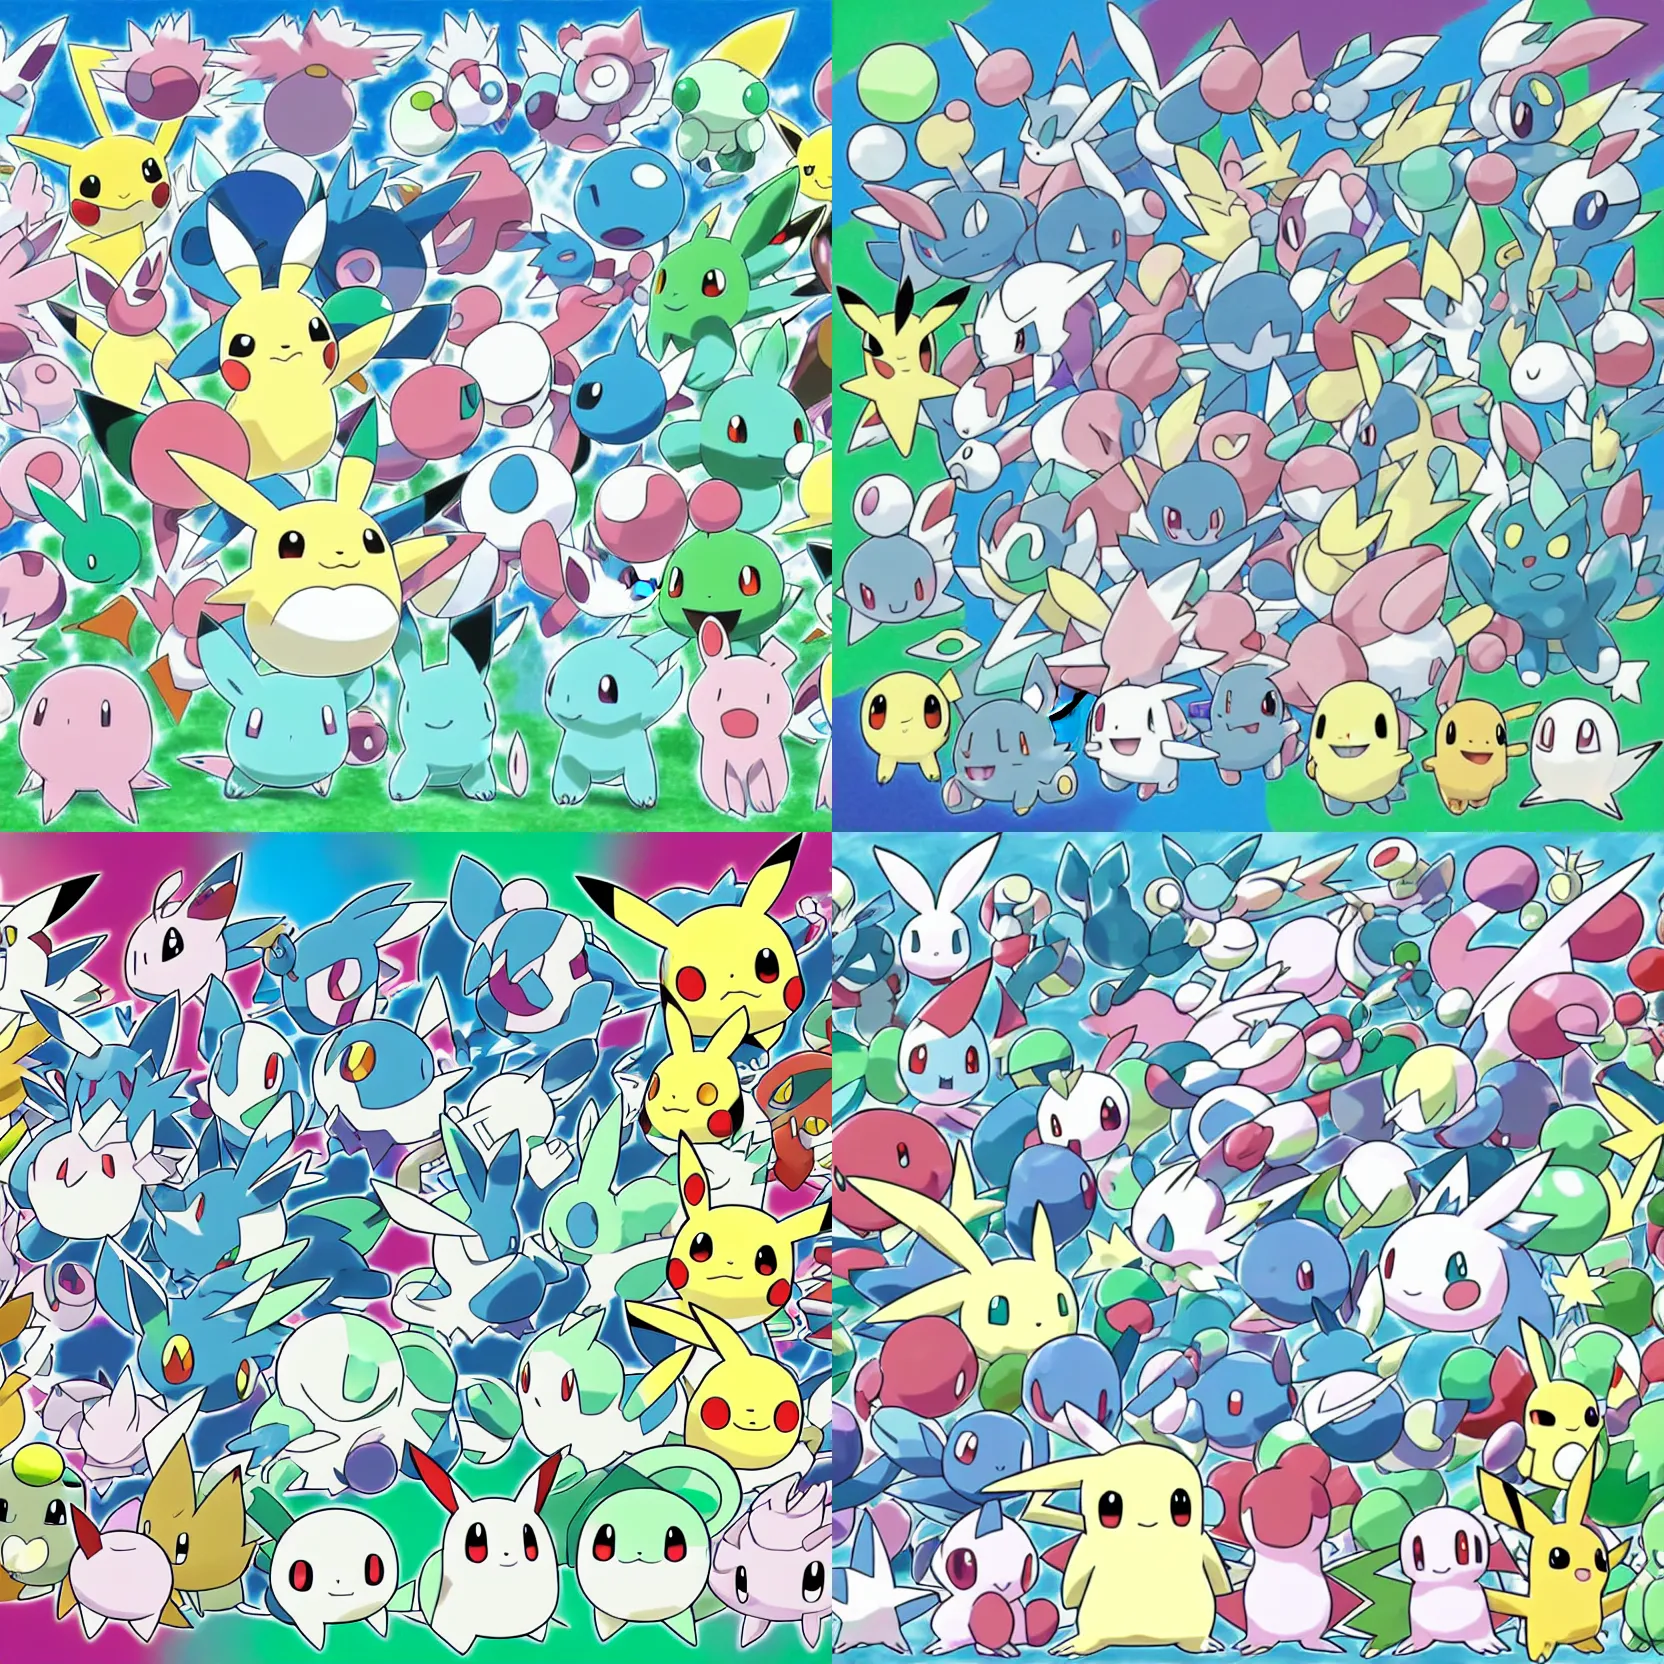 Prompt: official art of a diverse crowd of Pokémon, by Ken Sugimori, whitespace, Bulbapedia, Pokémon logo, tangela clefable roserade togekiss foongus bellsprout slurpuff